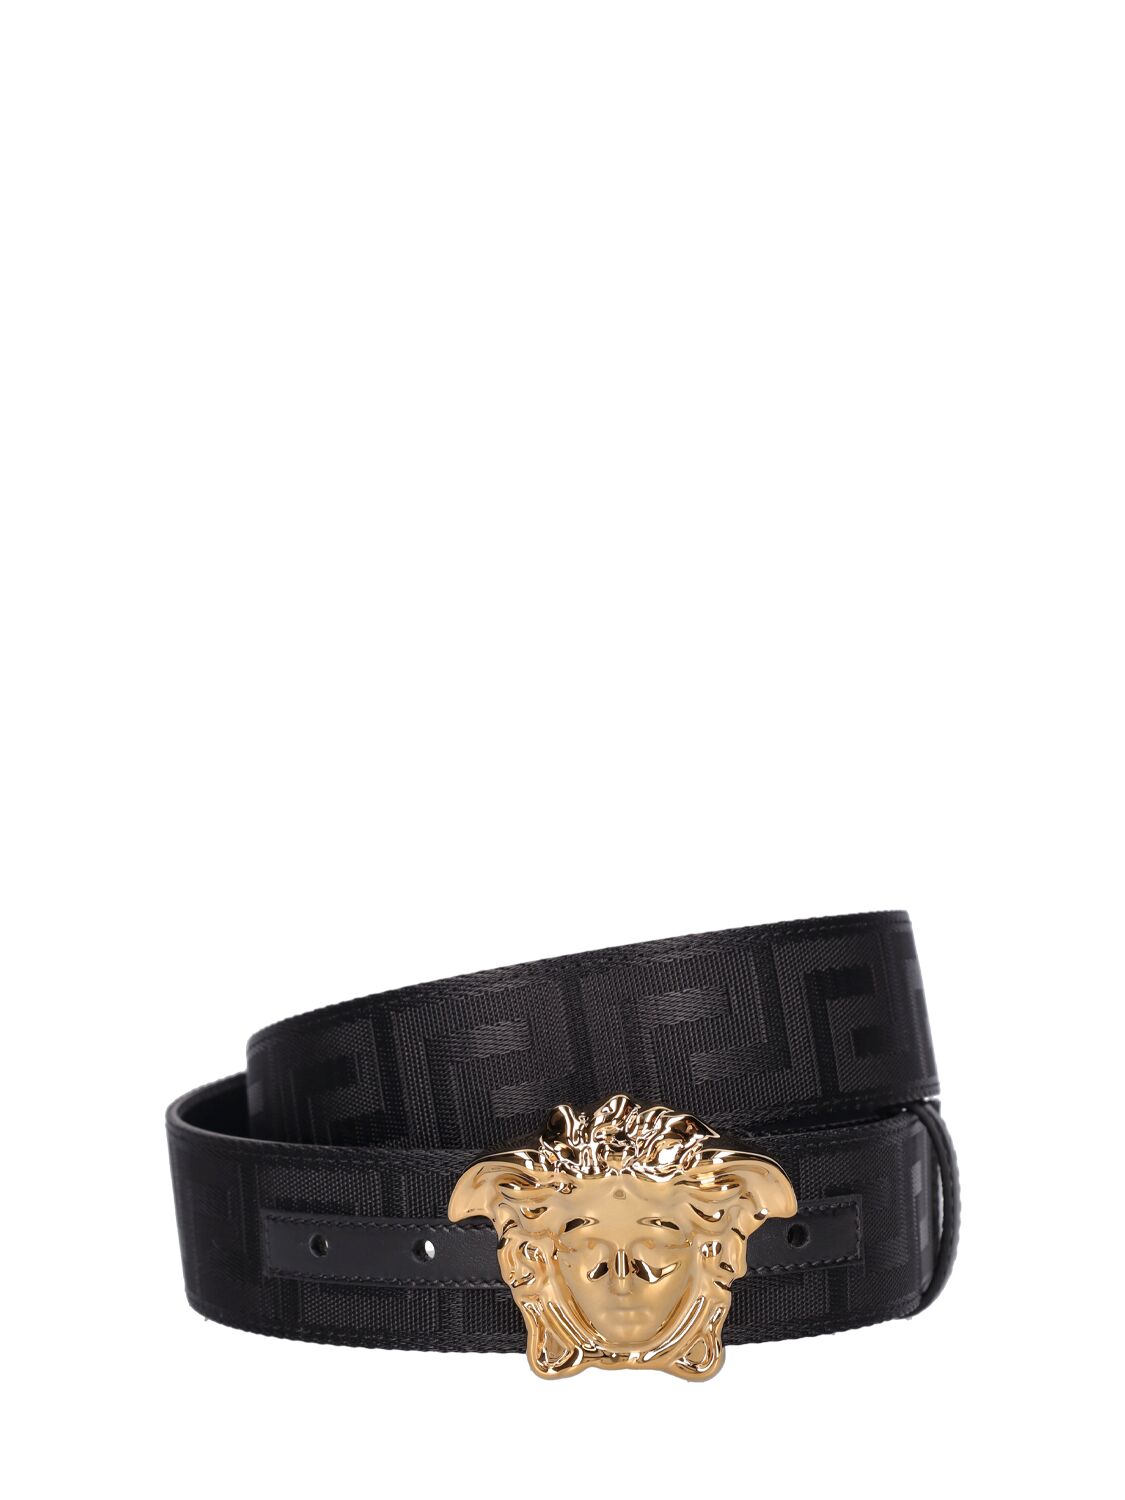 Versace Belt With Medusa In Black